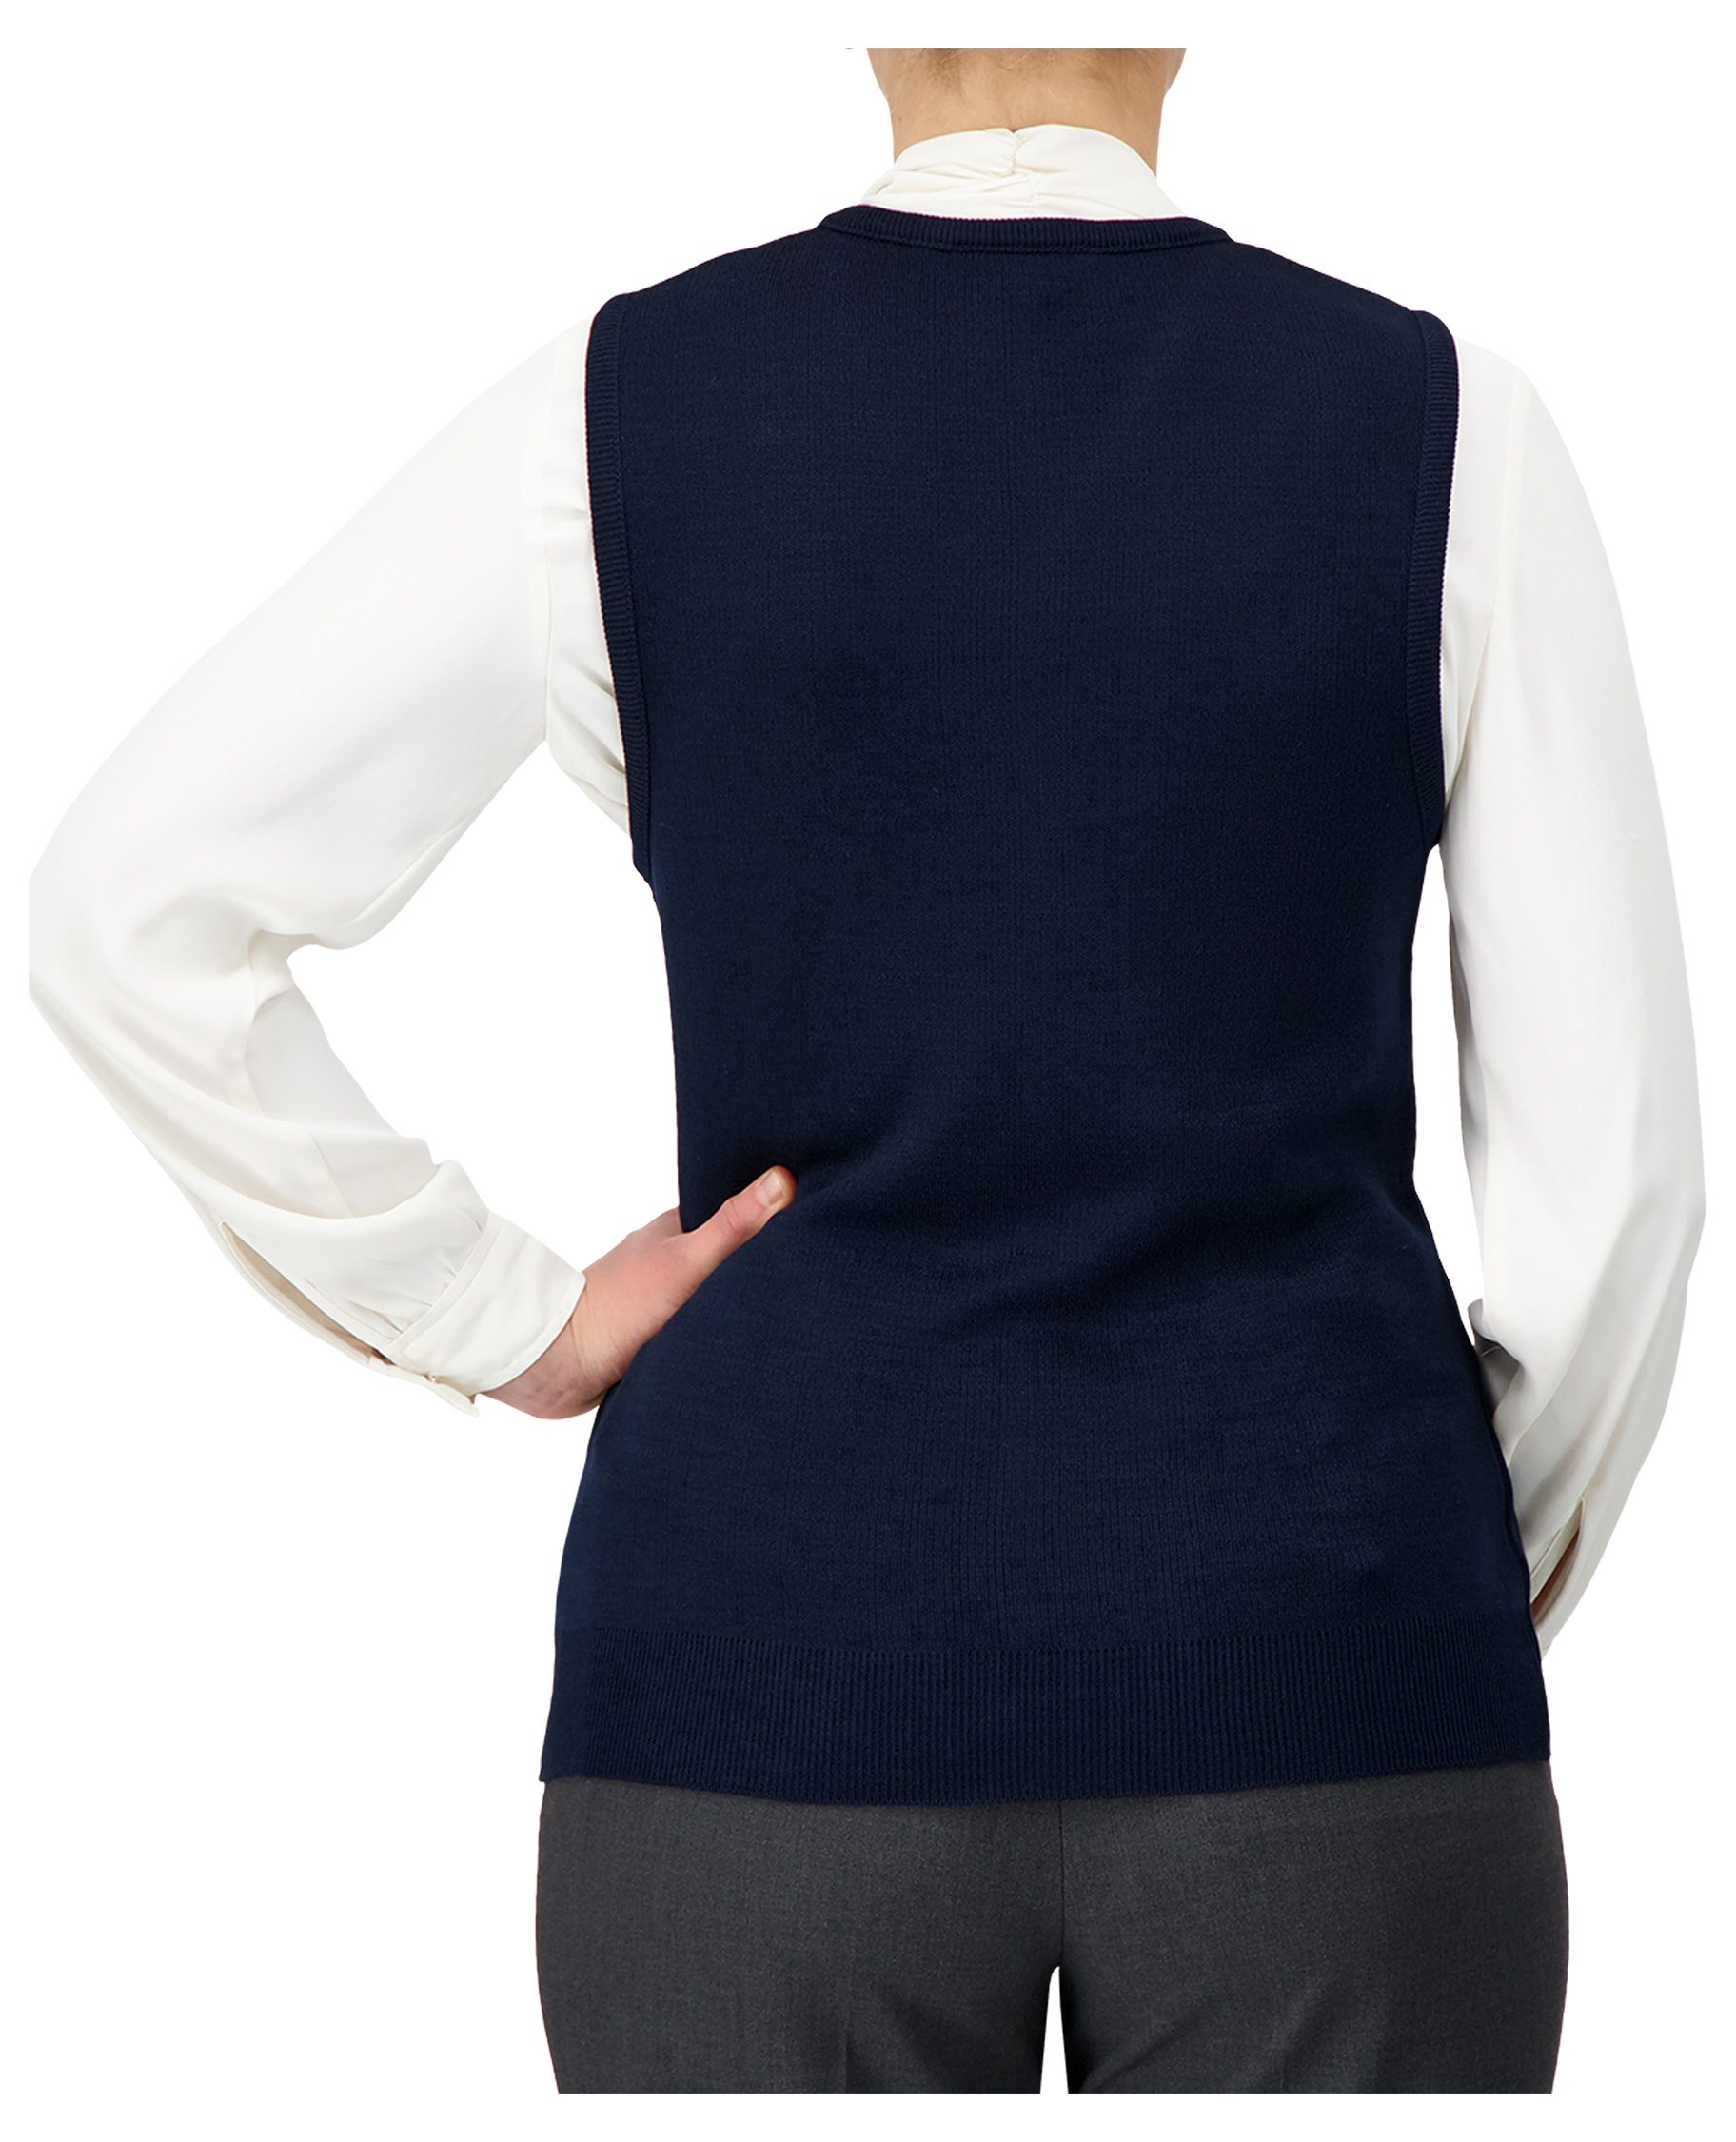 Cobmex Ladies "Cashmere"-Like V-Neck Vest #3109 Navy Back